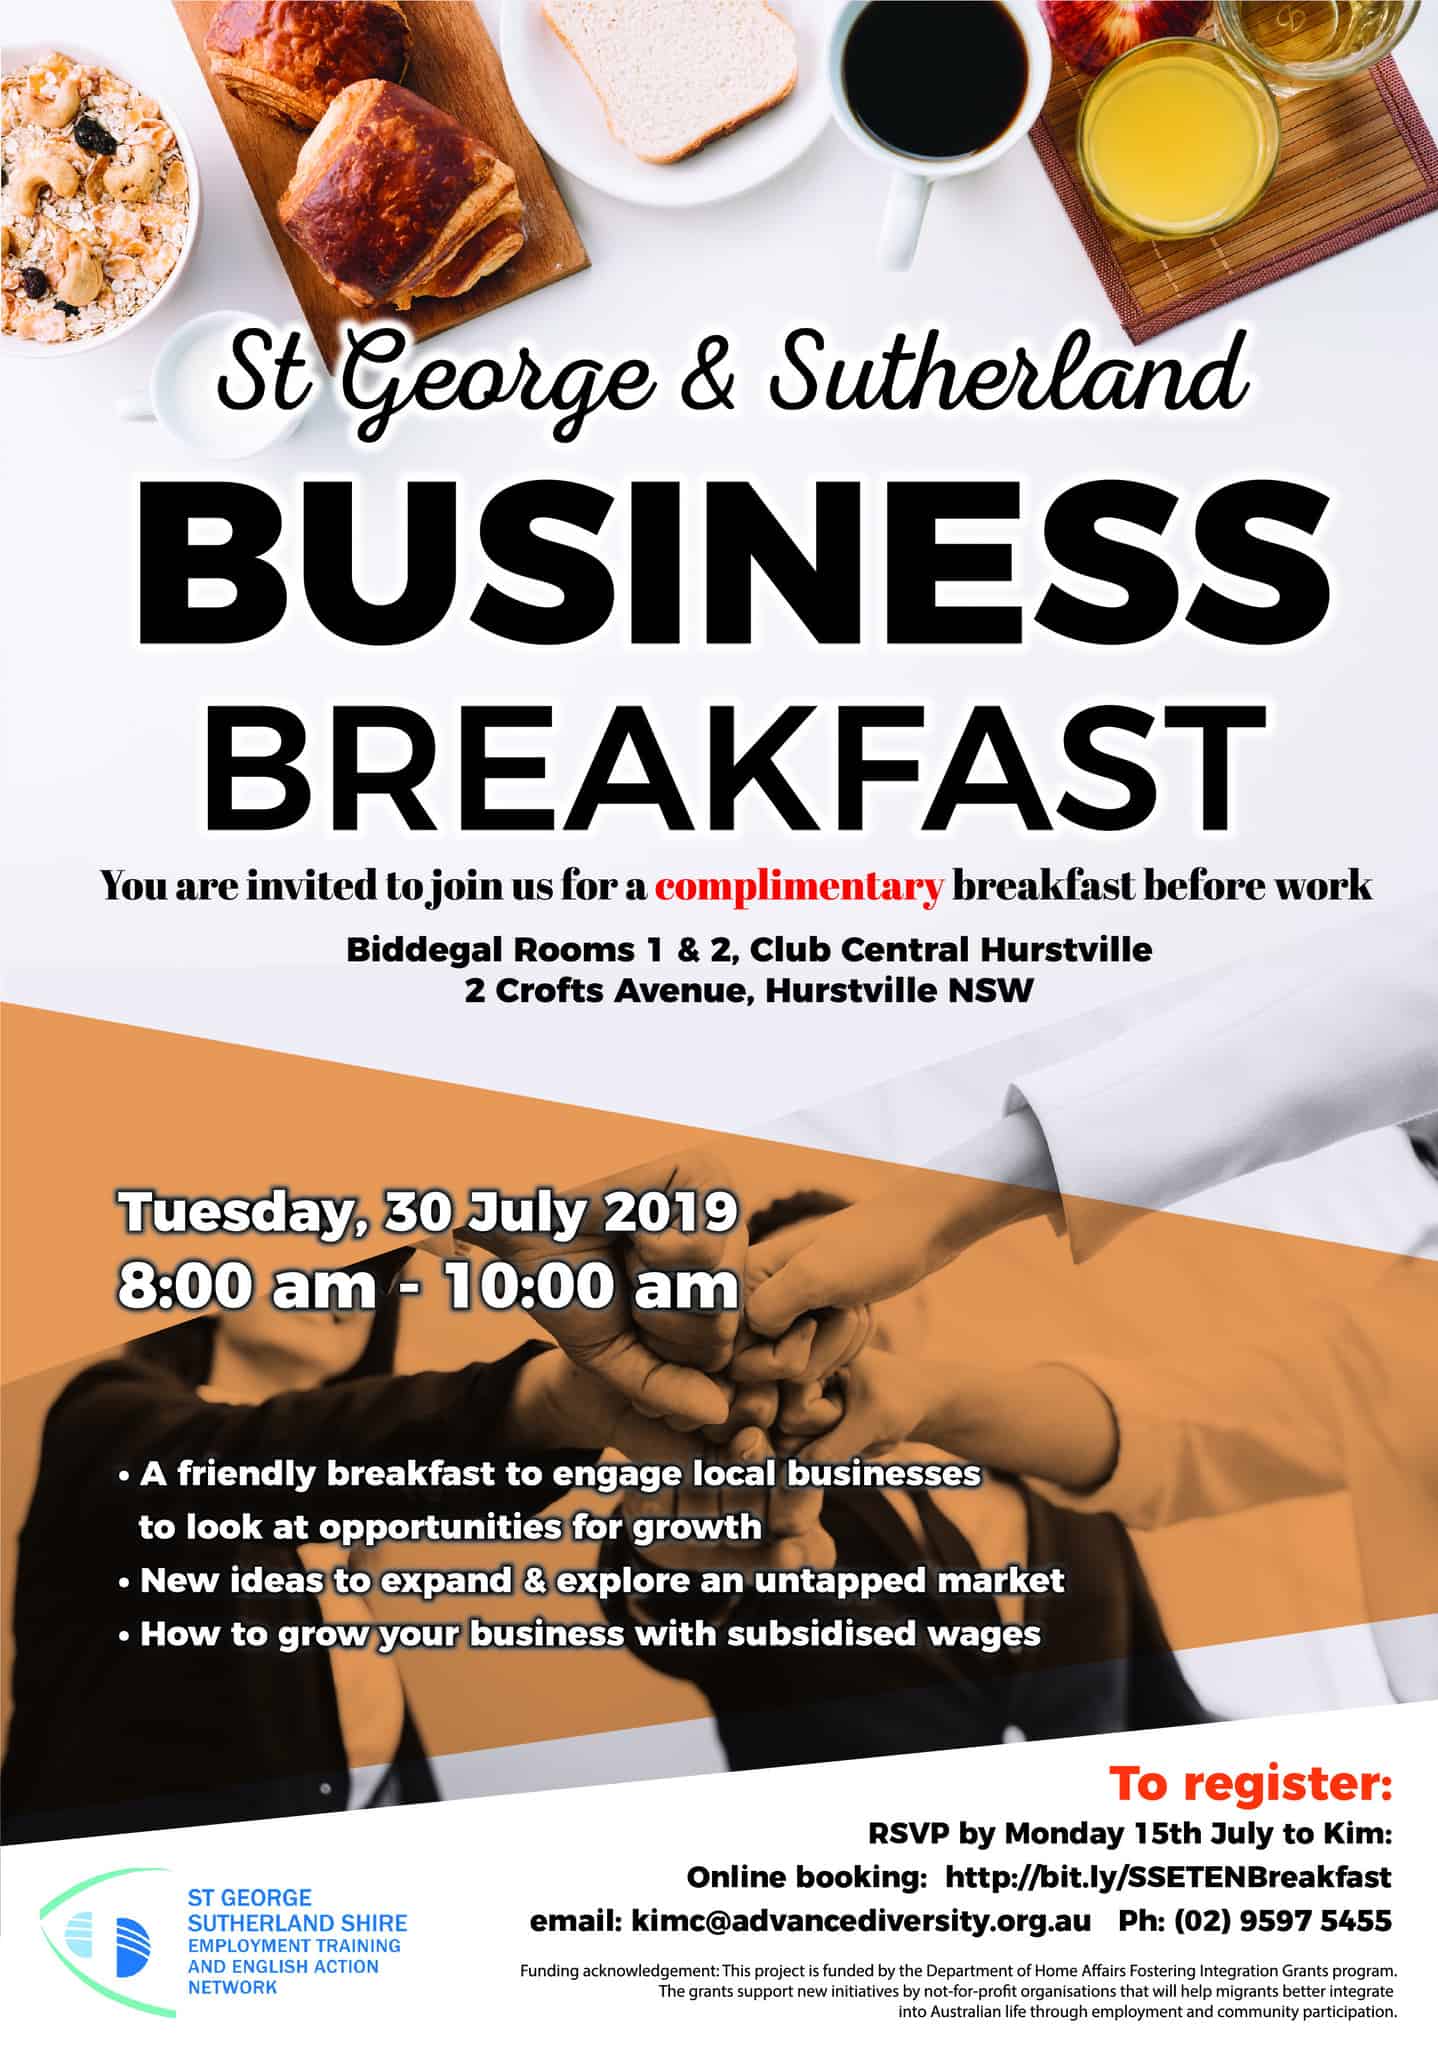 St George & Sutherland Business Breakfast - Advance Diversity